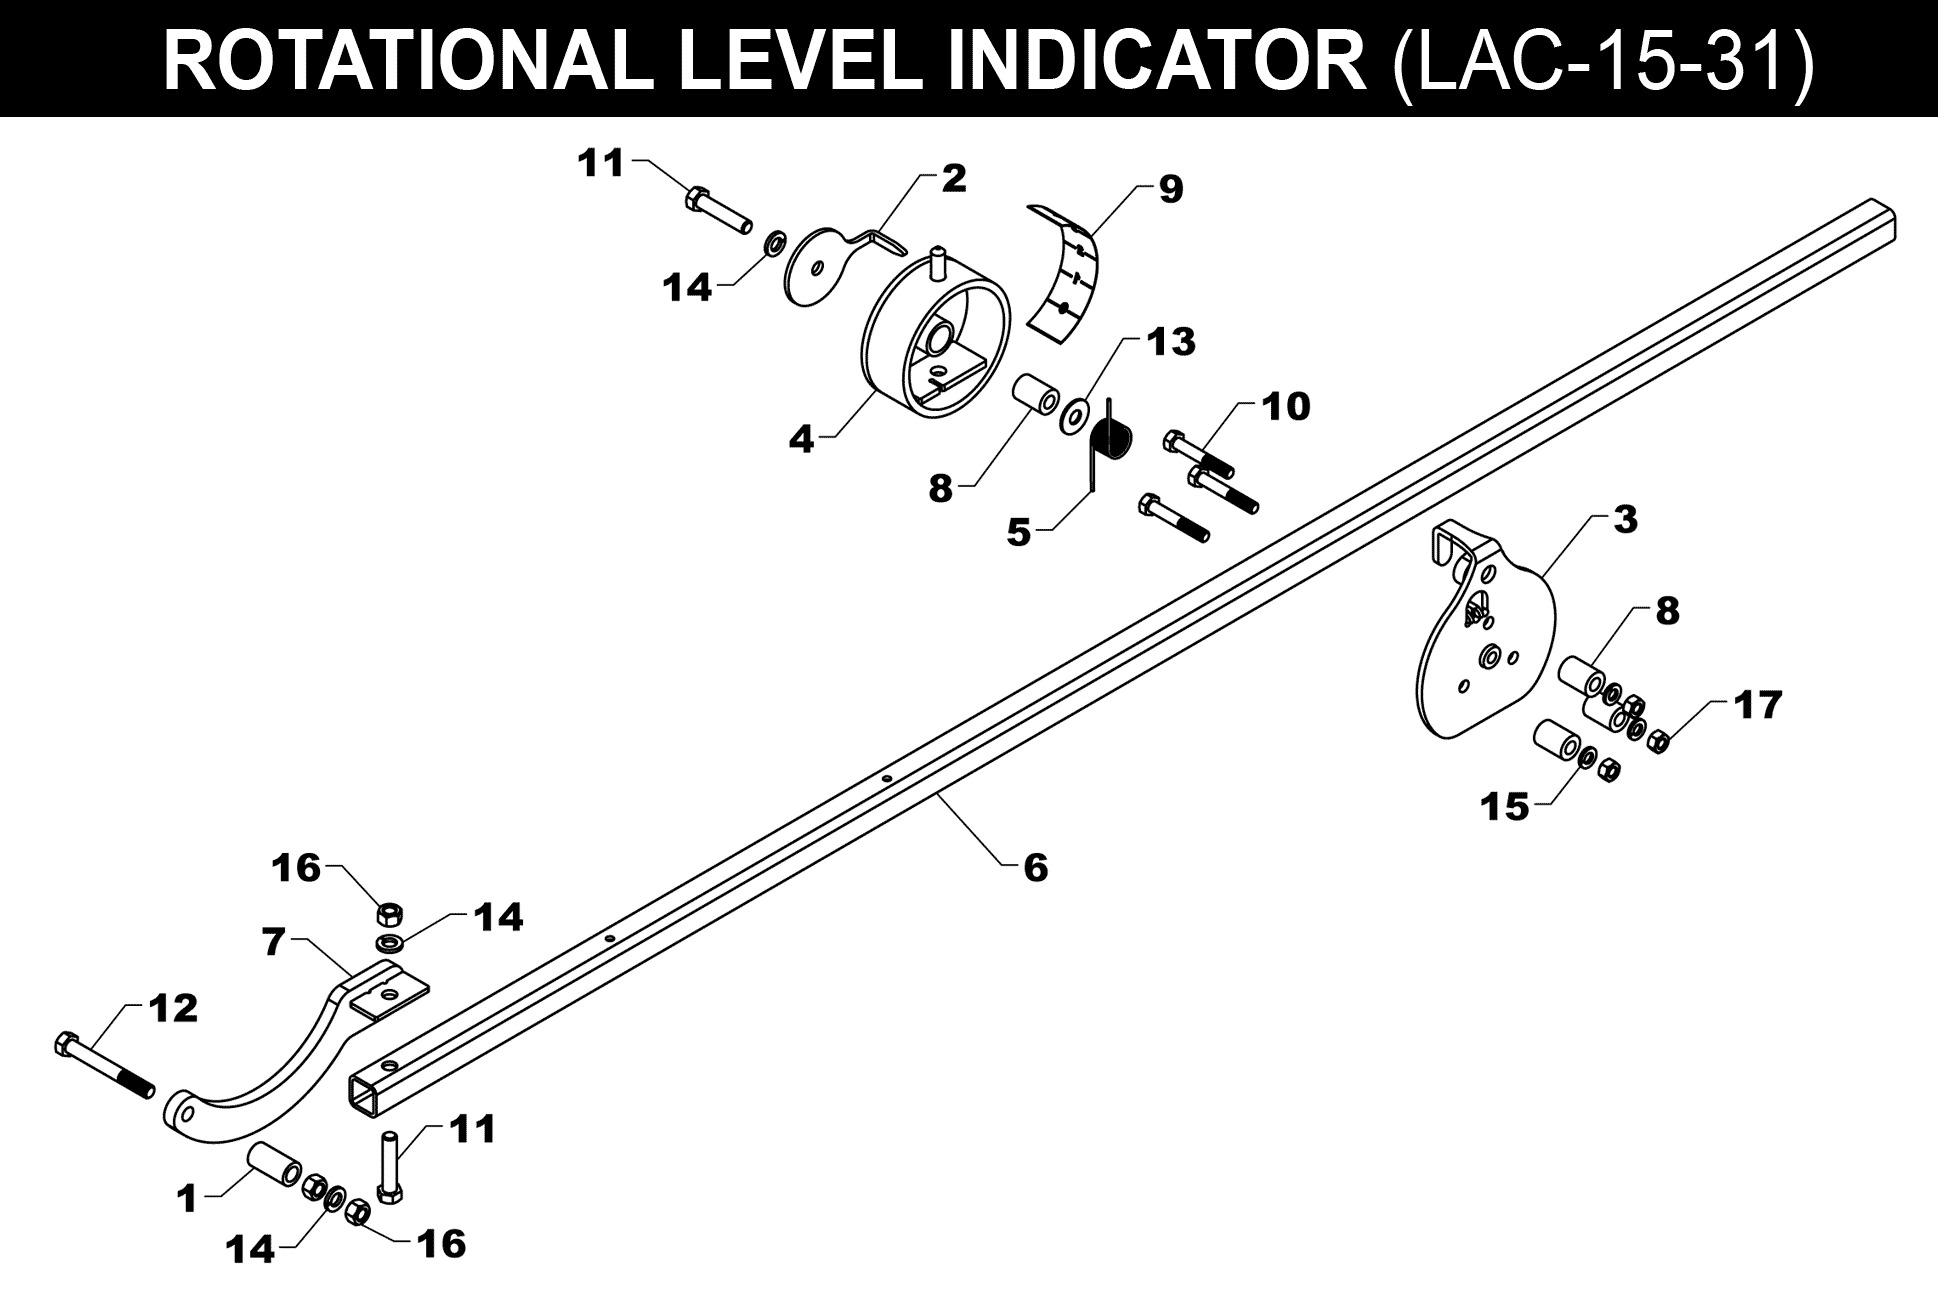 Bucket Indicator - LAC-15-31